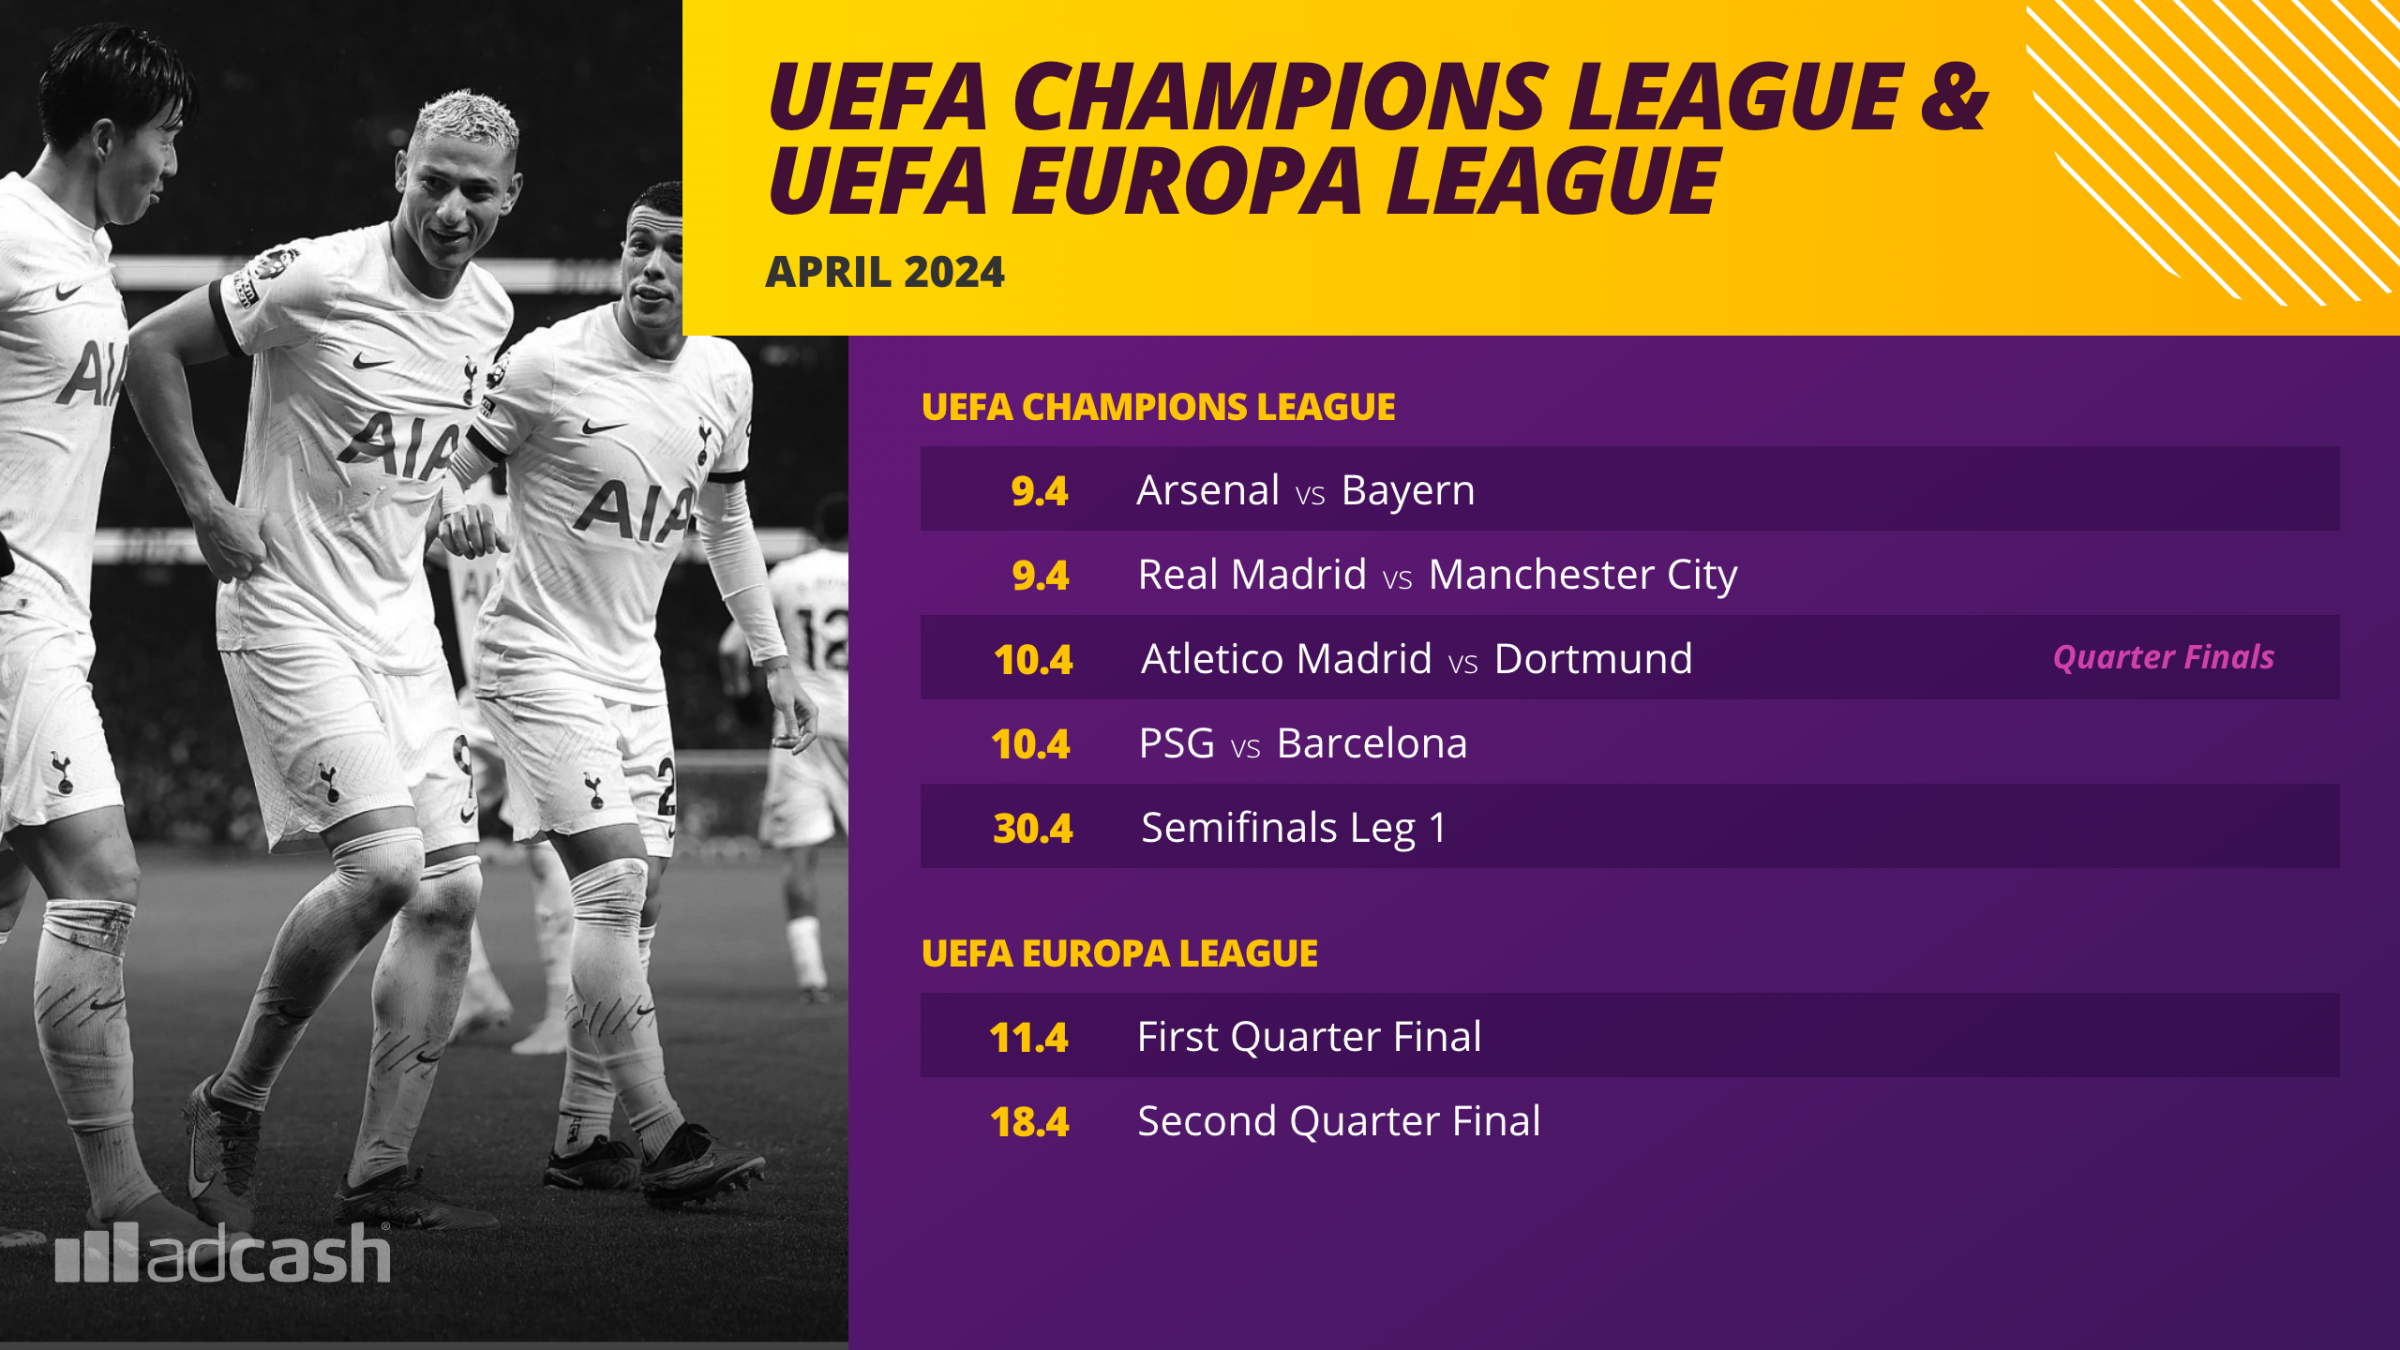 april-uefa-champions-league-uefa-europa-league-2560-x-1440-png.49675